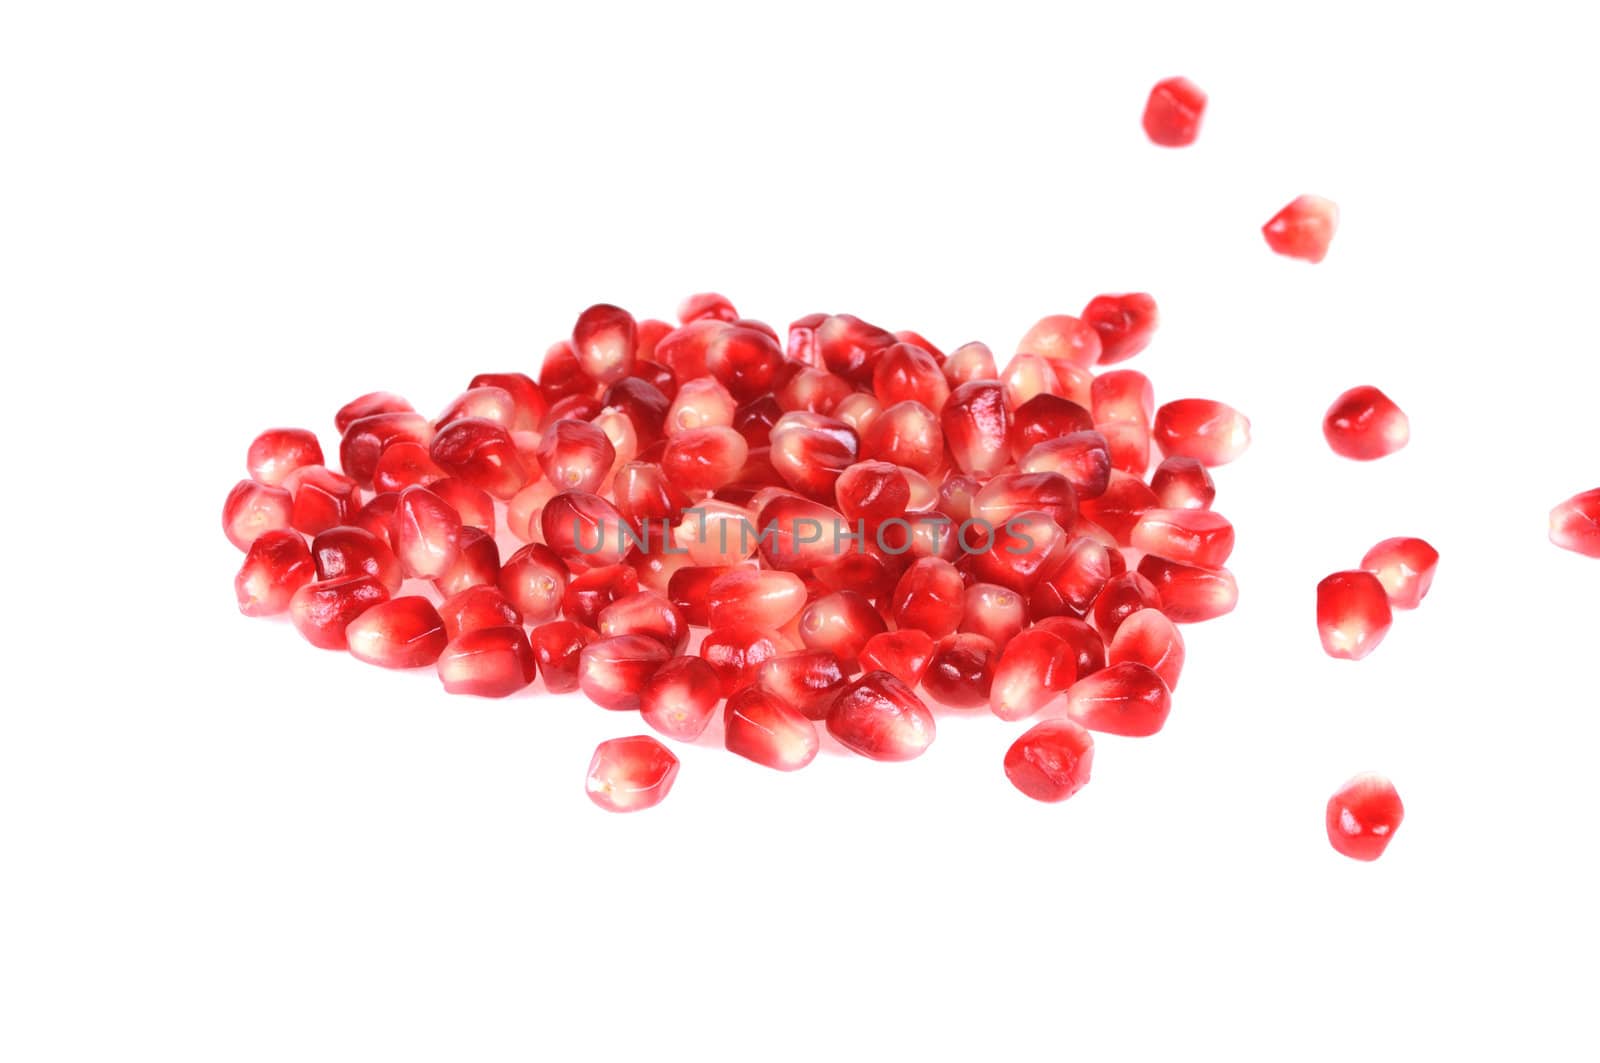 Pomegranate grains by uriy2007